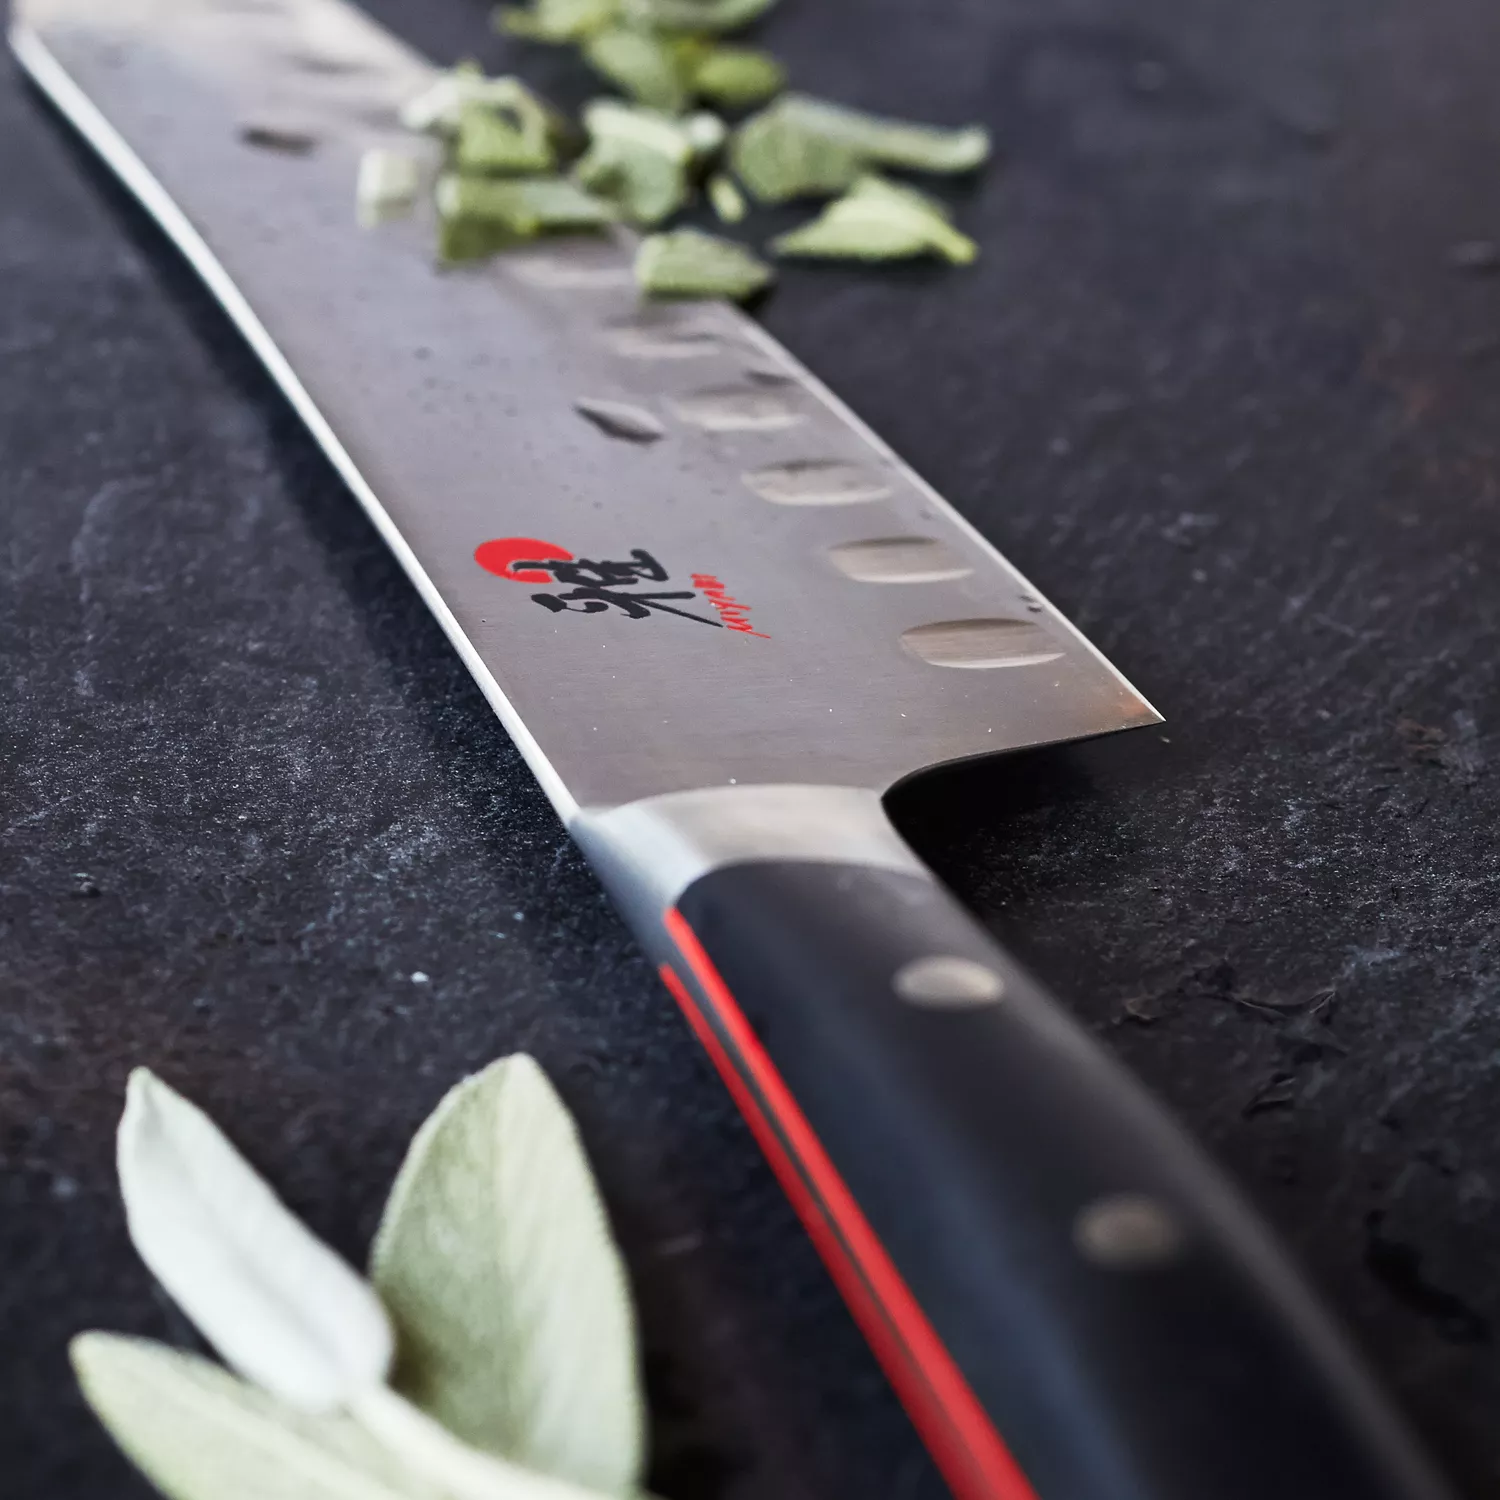 OXO Good Grips PRO 6.5-Inch Santoku Knife